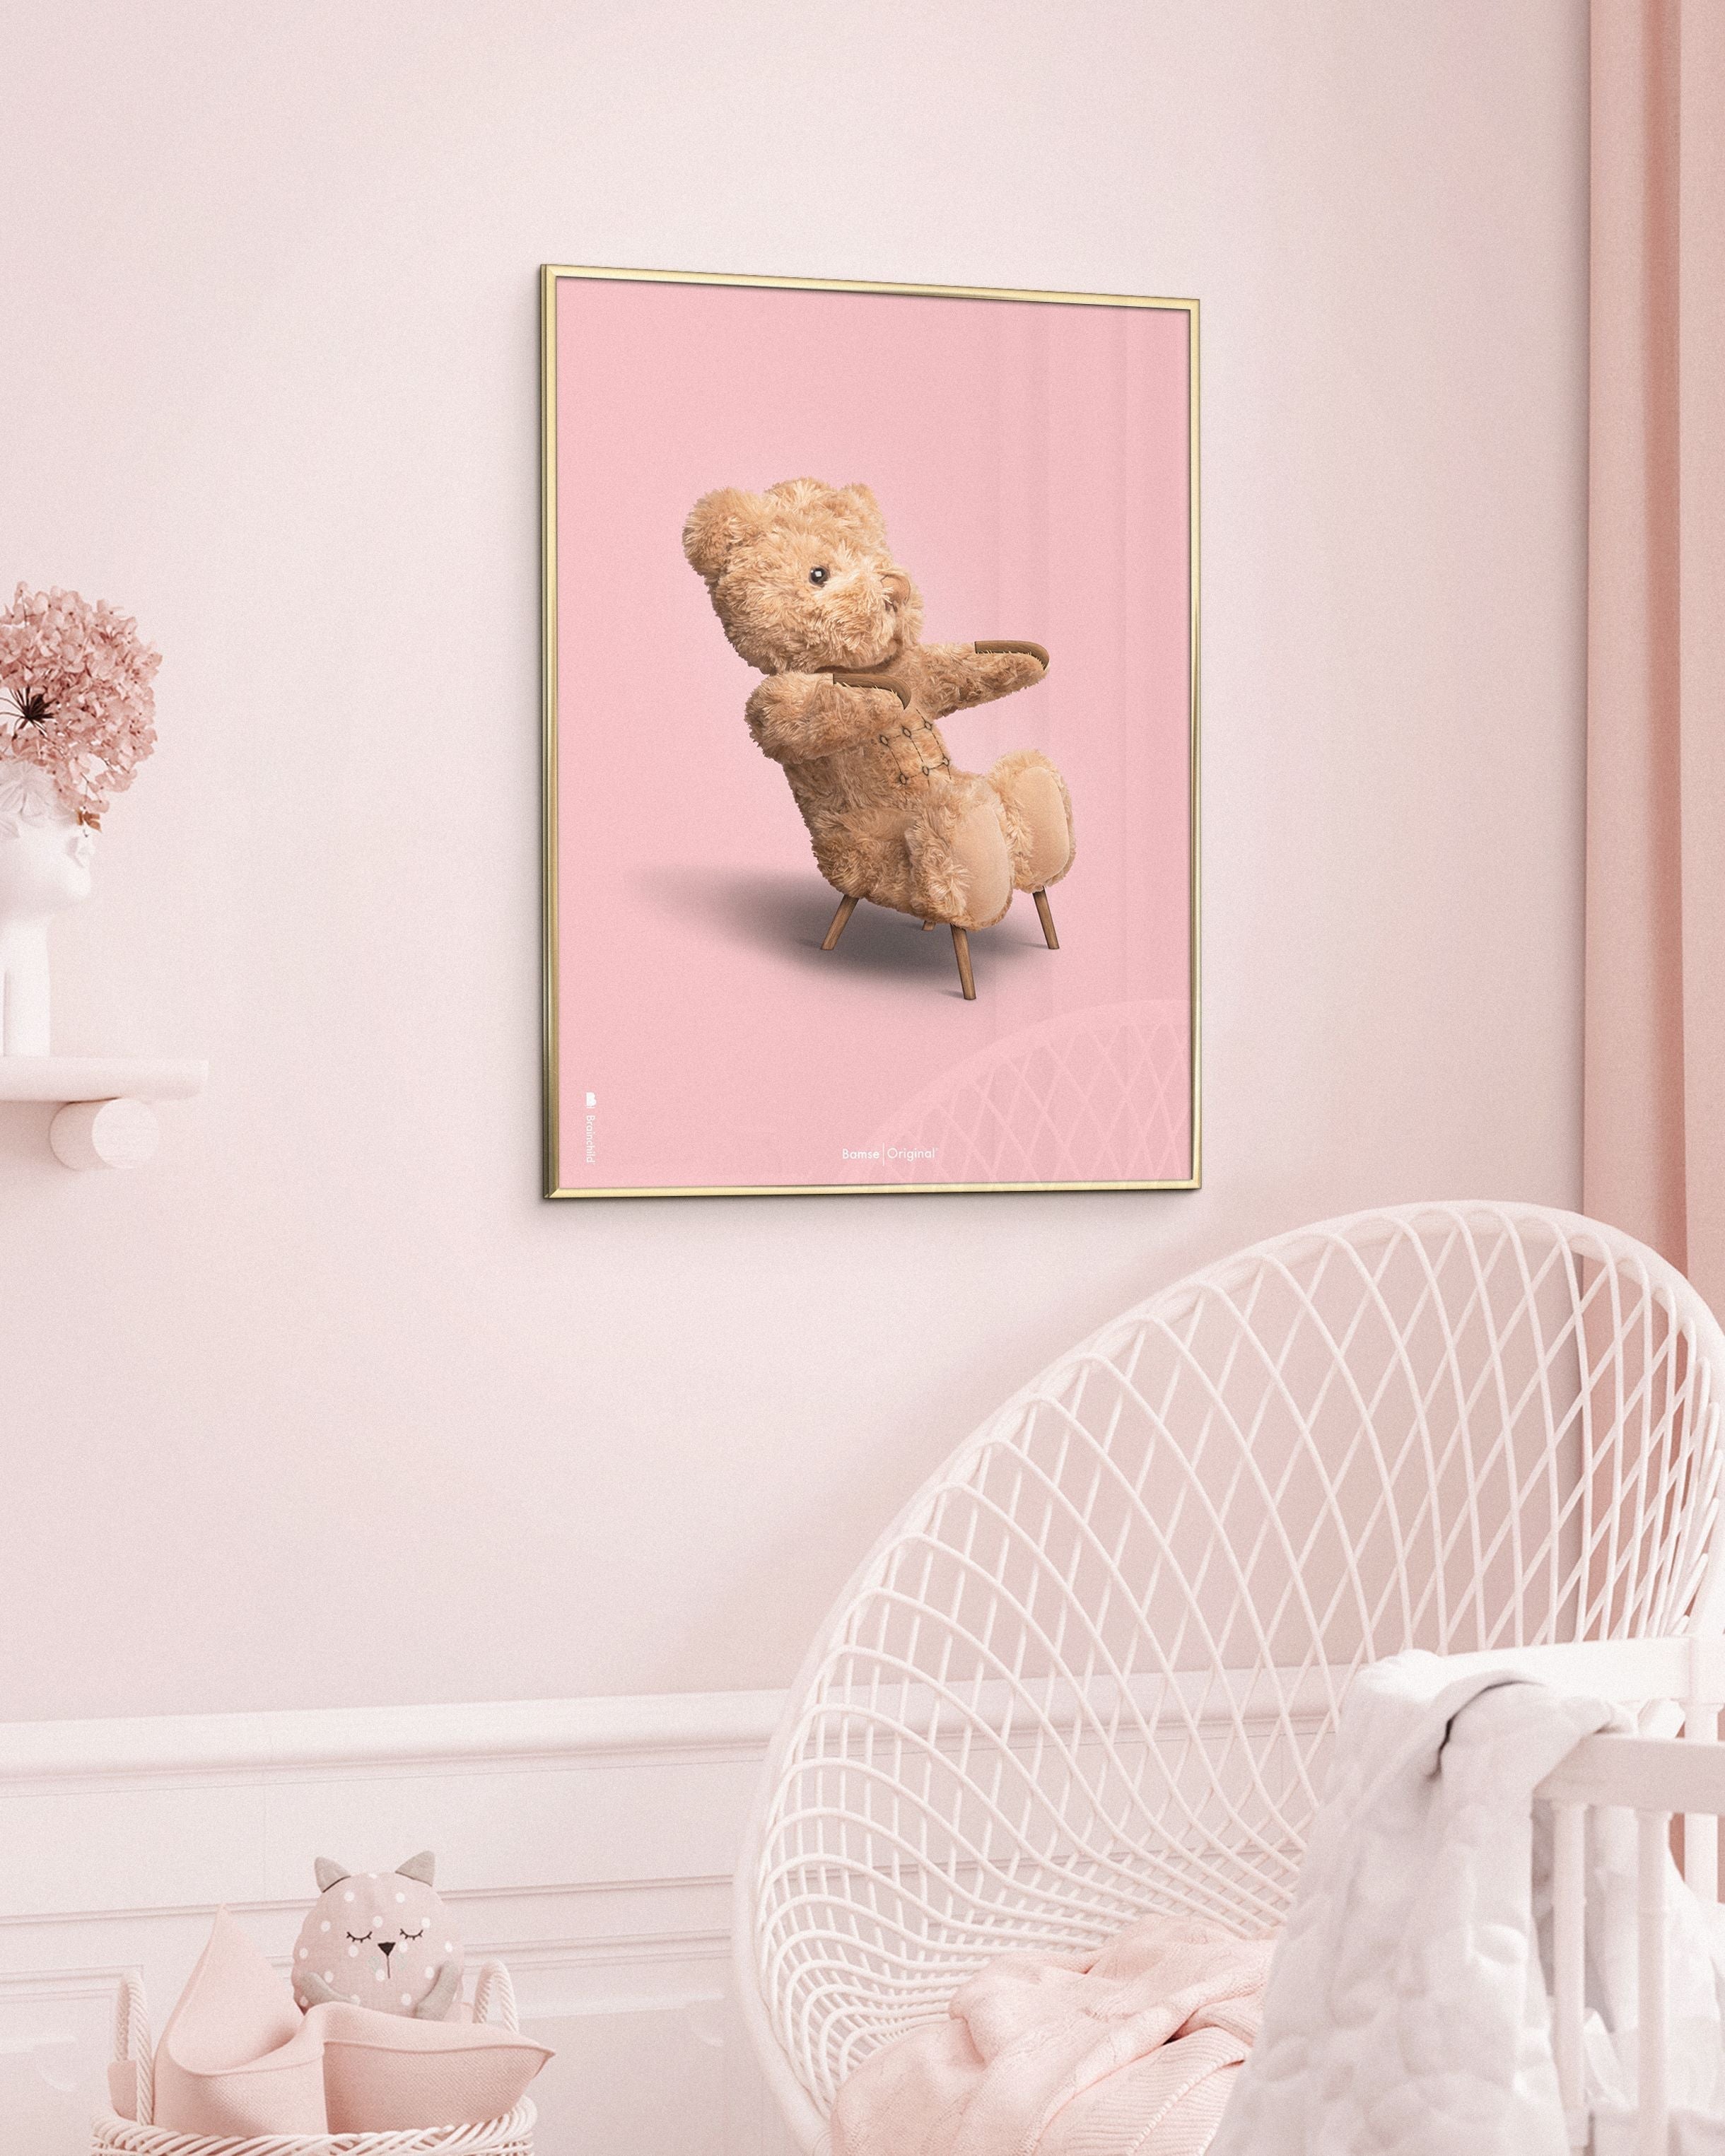 Brainchild Teddybeer klassiek posterframe in zwart gelakt hout a5, roze achtergrond